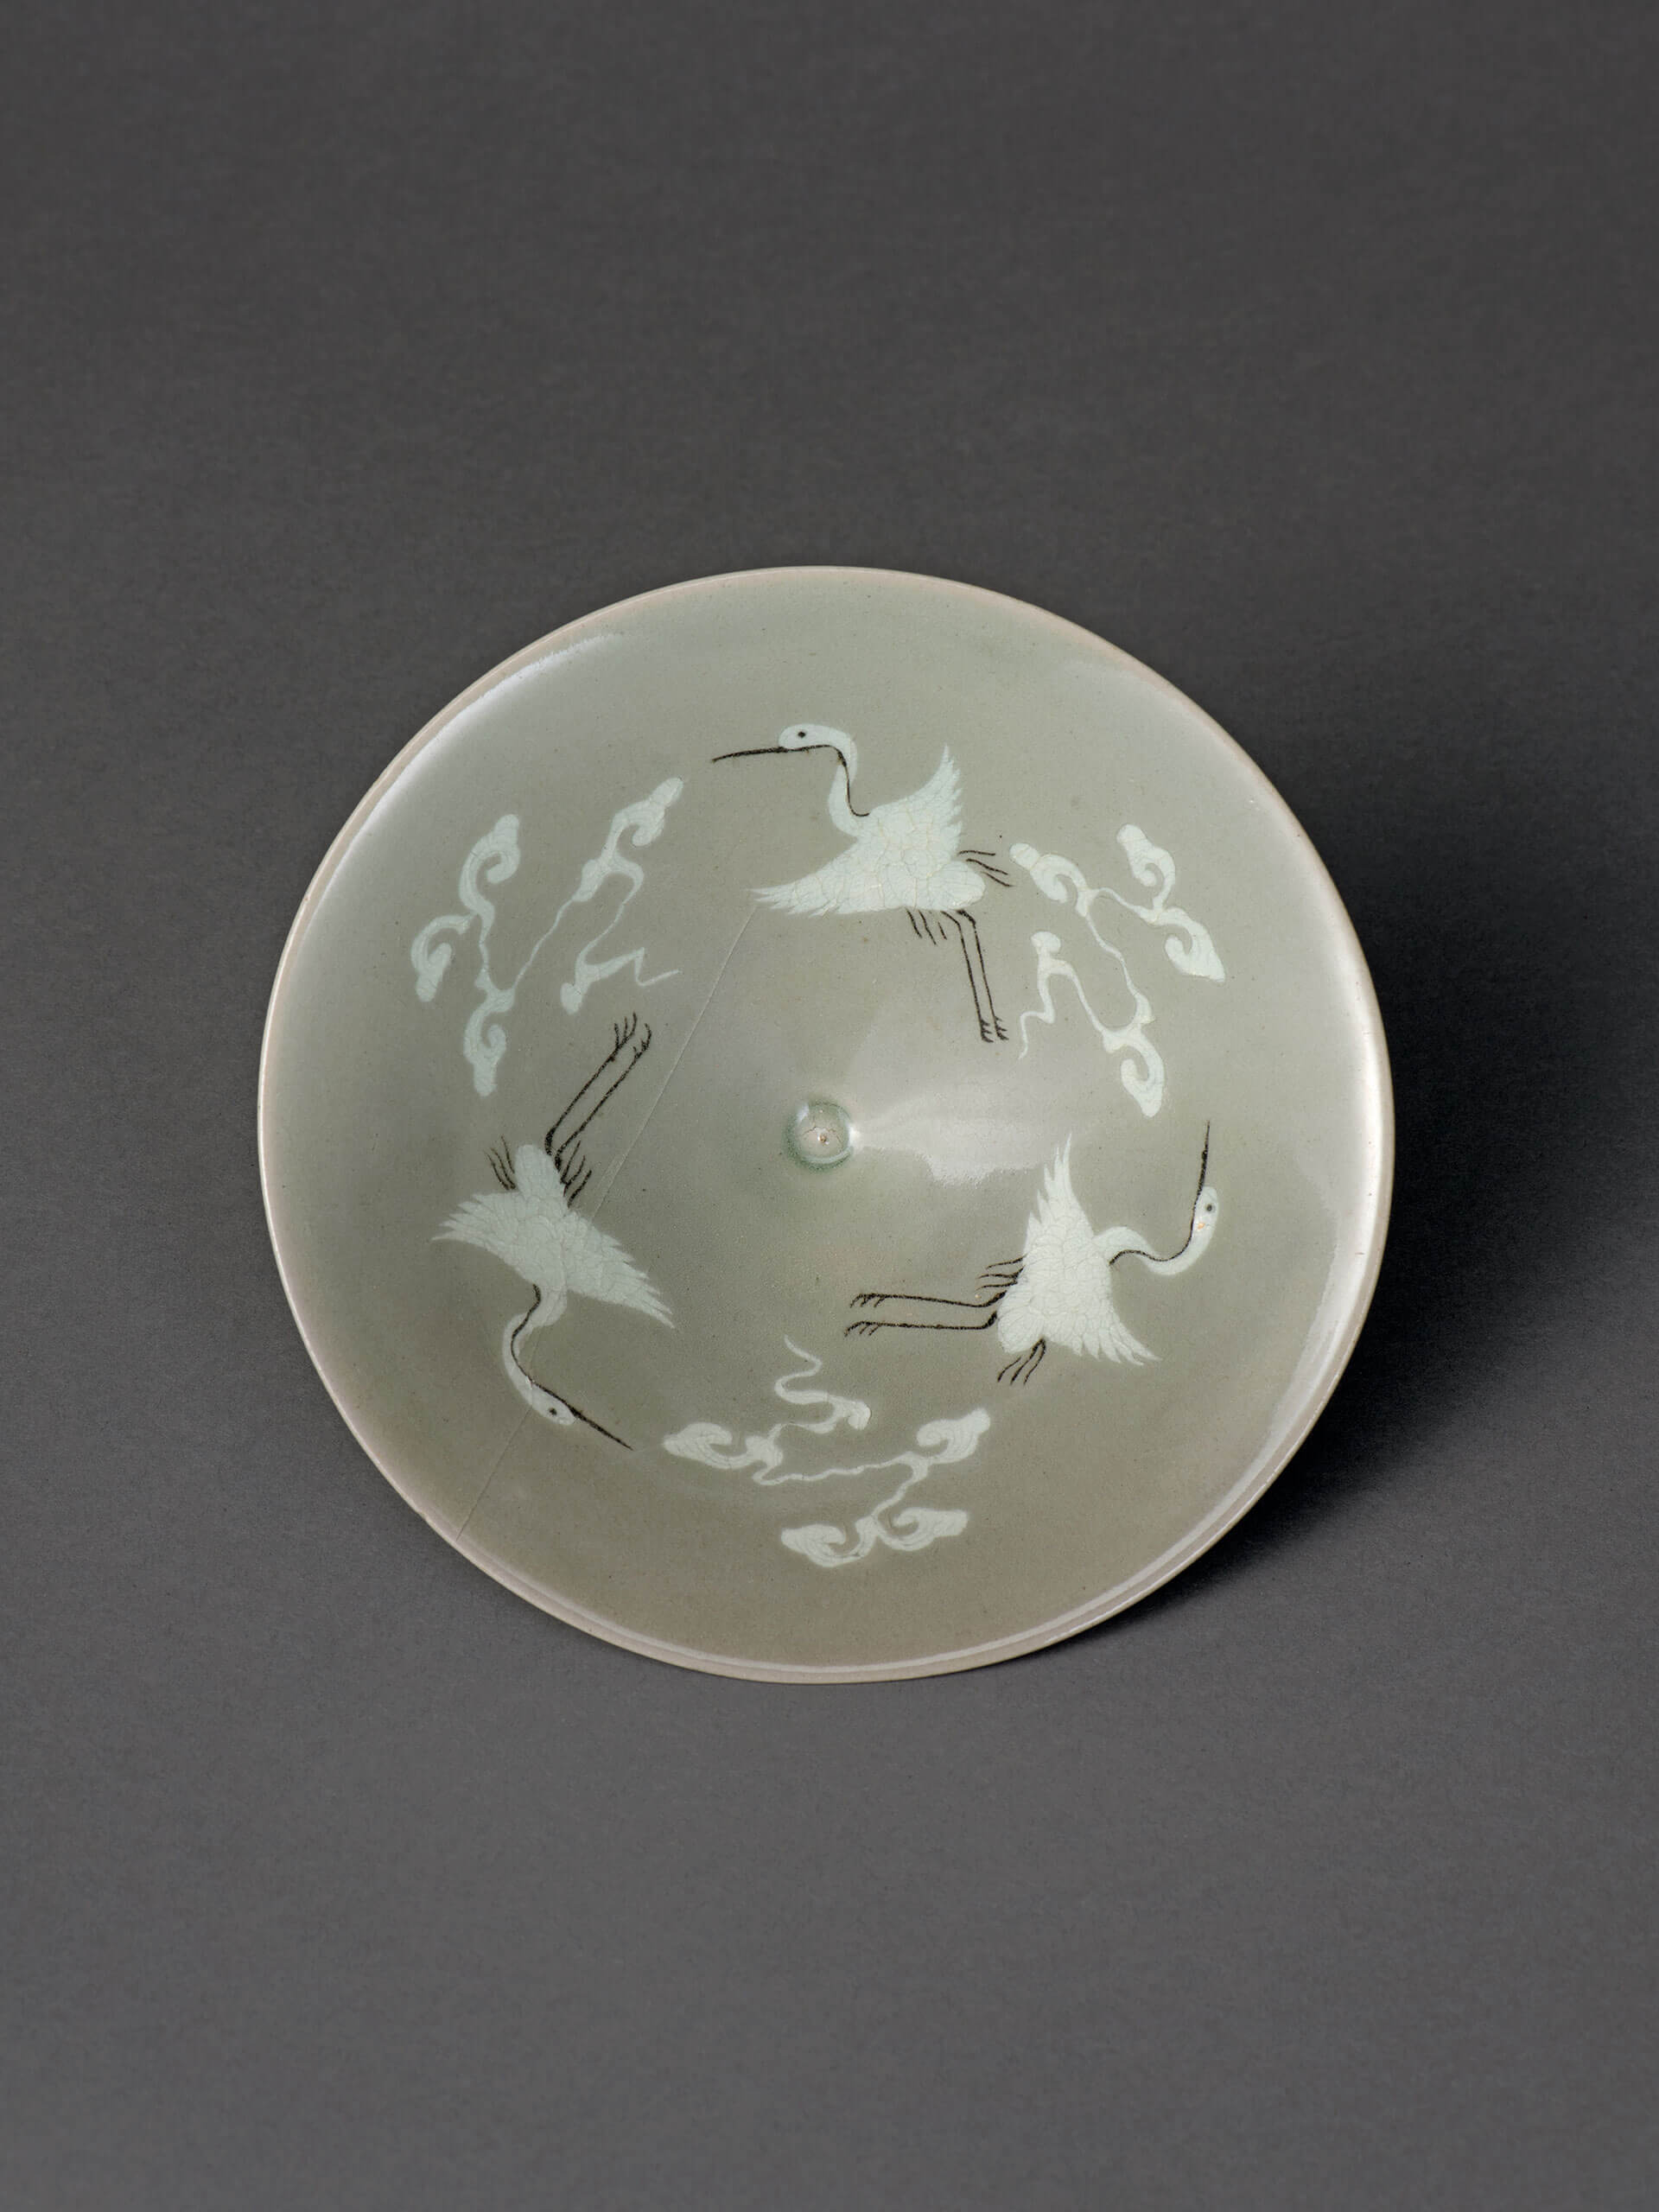 Bowl with inlaid cloud and crane design against celadon glaze